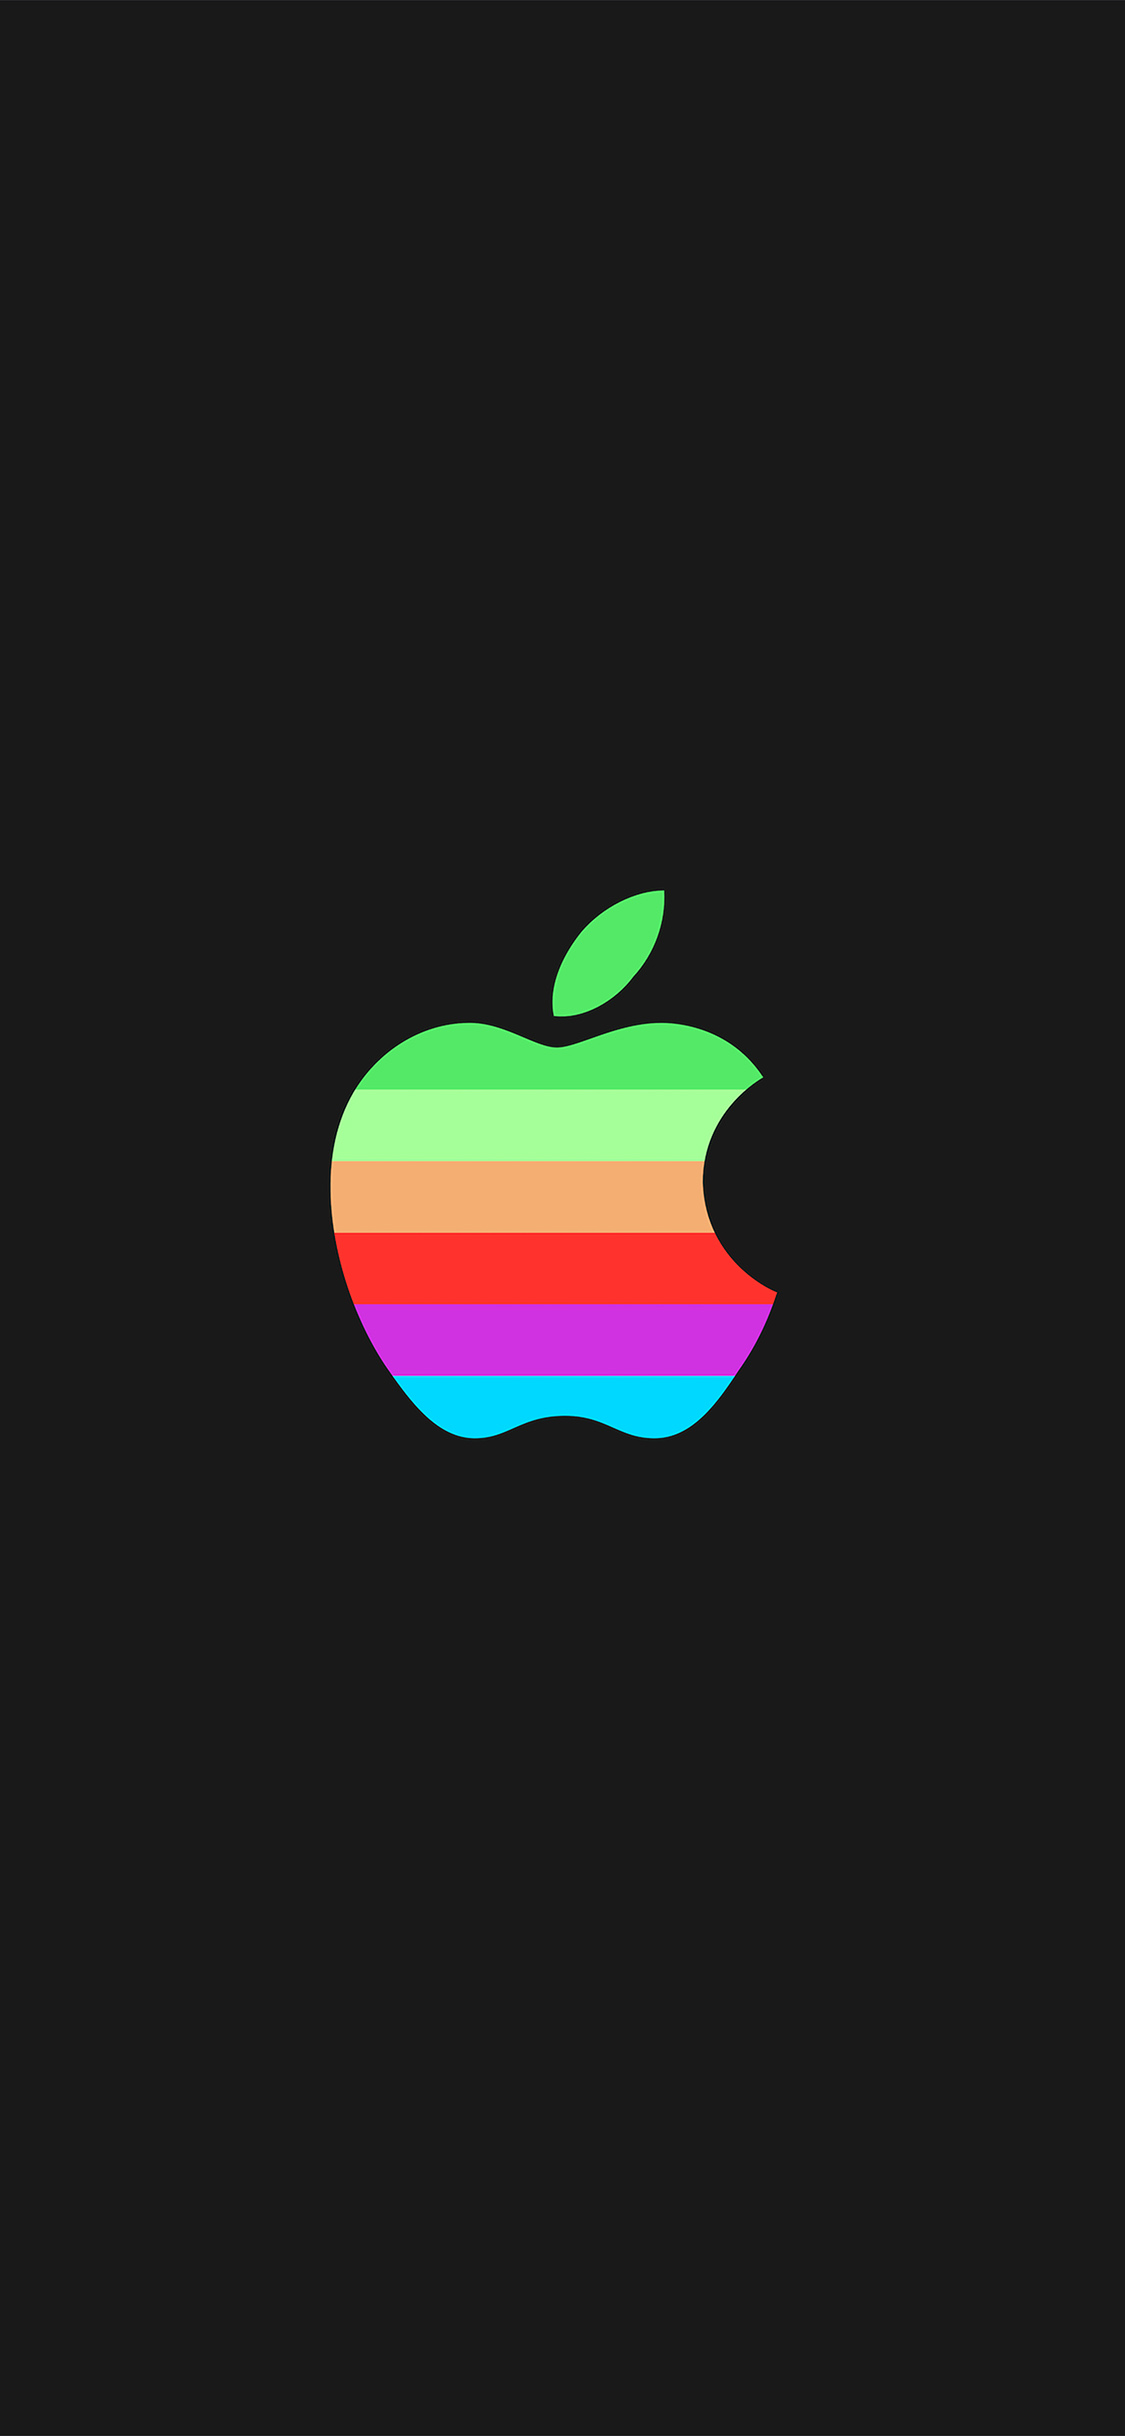 iPhone X wallpaper. minimal logo apple dark rainbow illustration art